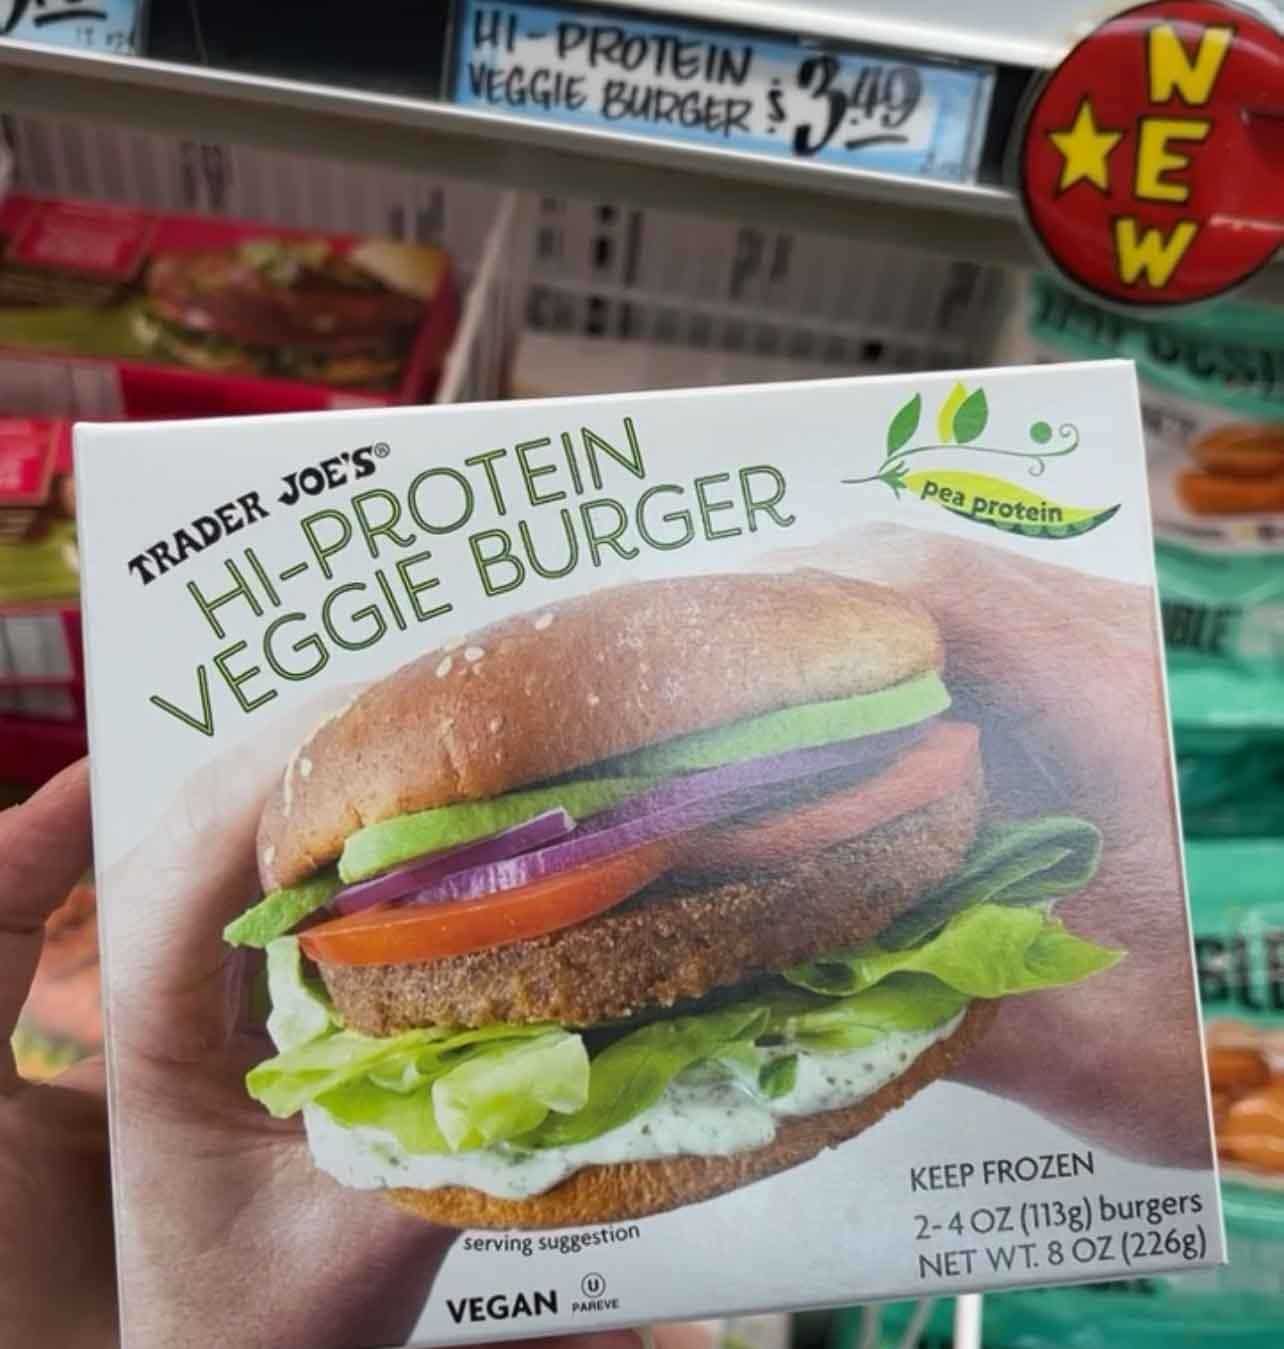 trader joe's hi-protein veggie burger